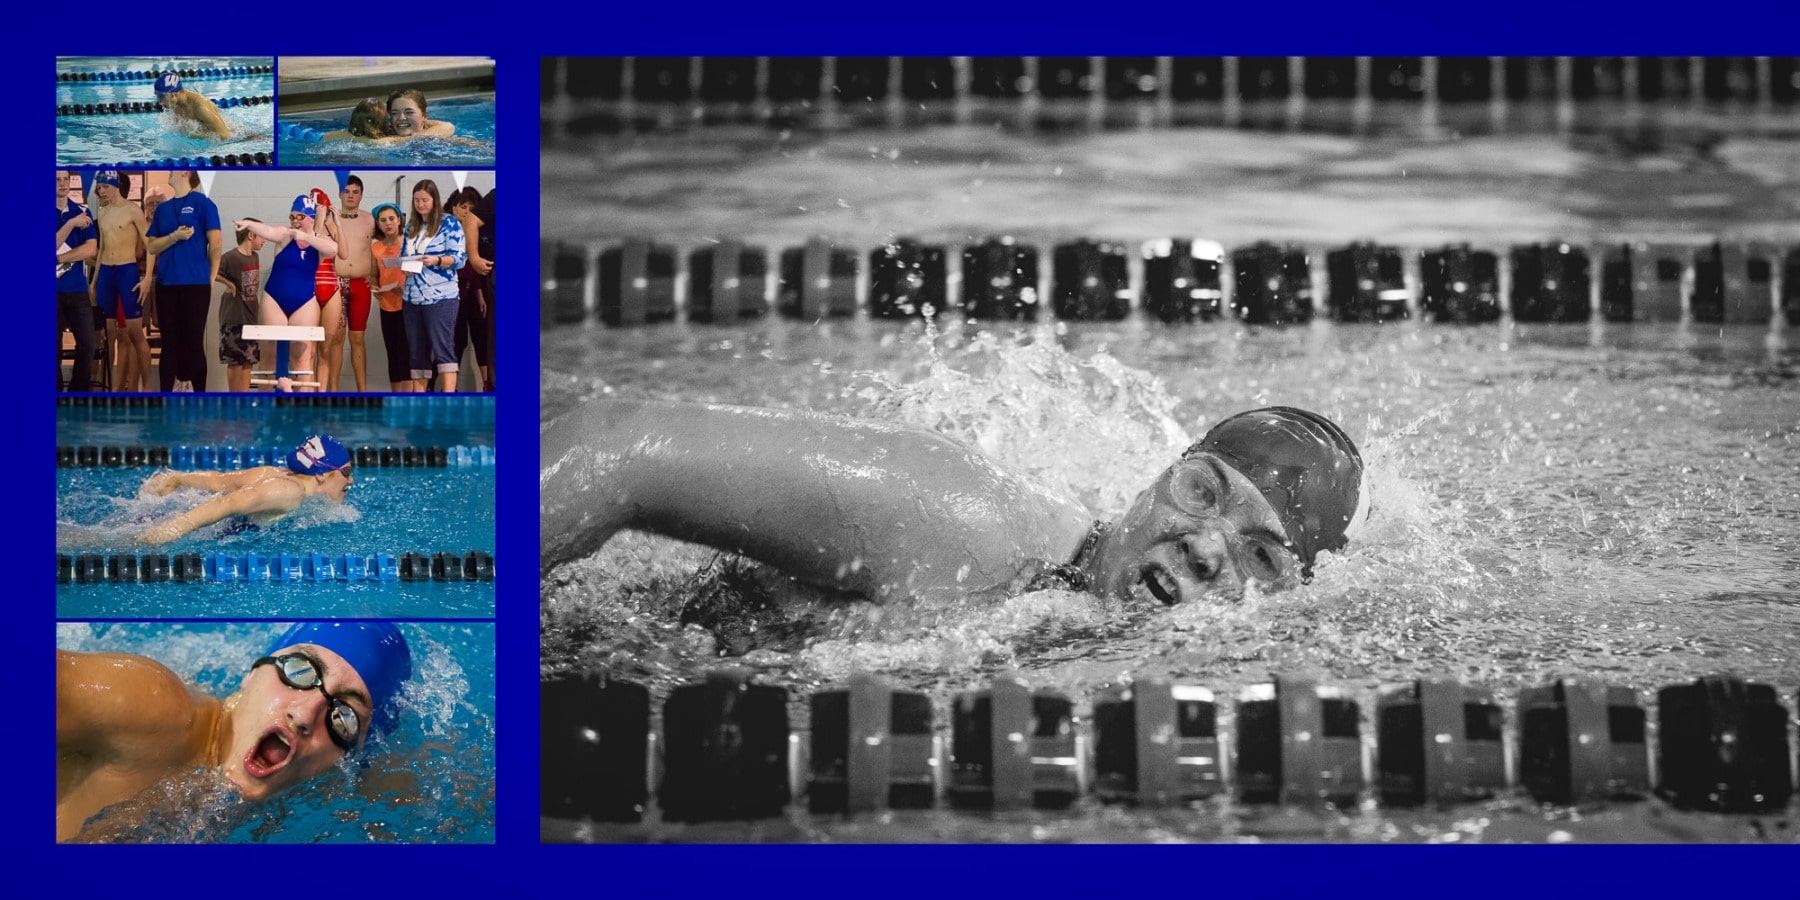 Memory Book captures the local swim meet in Hendersonville, NC.